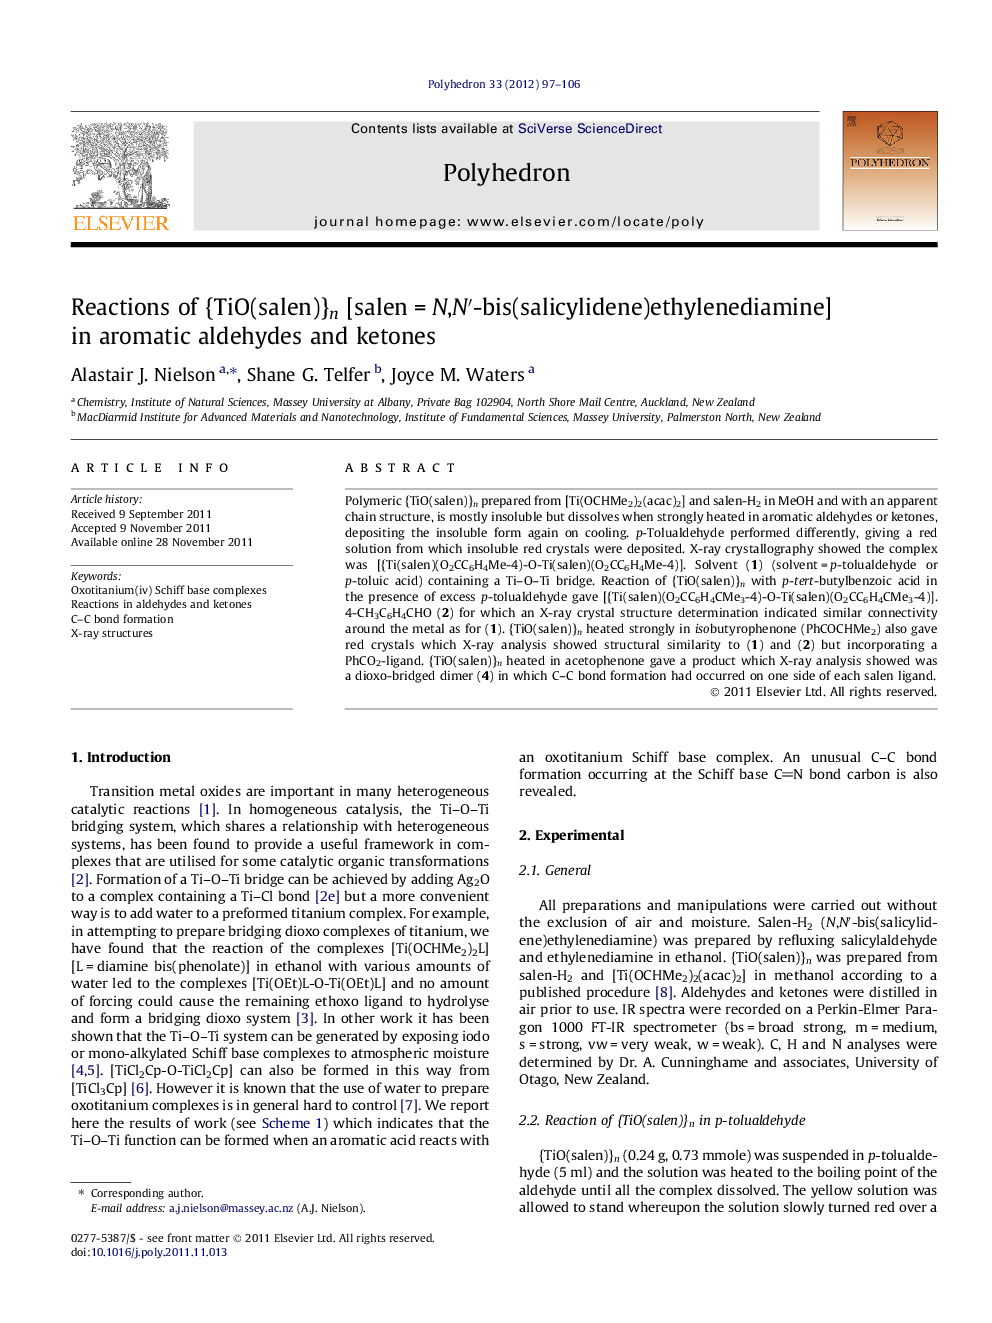 Reactions of {TiO(salen)}n [salenÂ =Â N,Nâ²-bis(salicylidene)ethylenediamine] in aromatic aldehydes and ketones